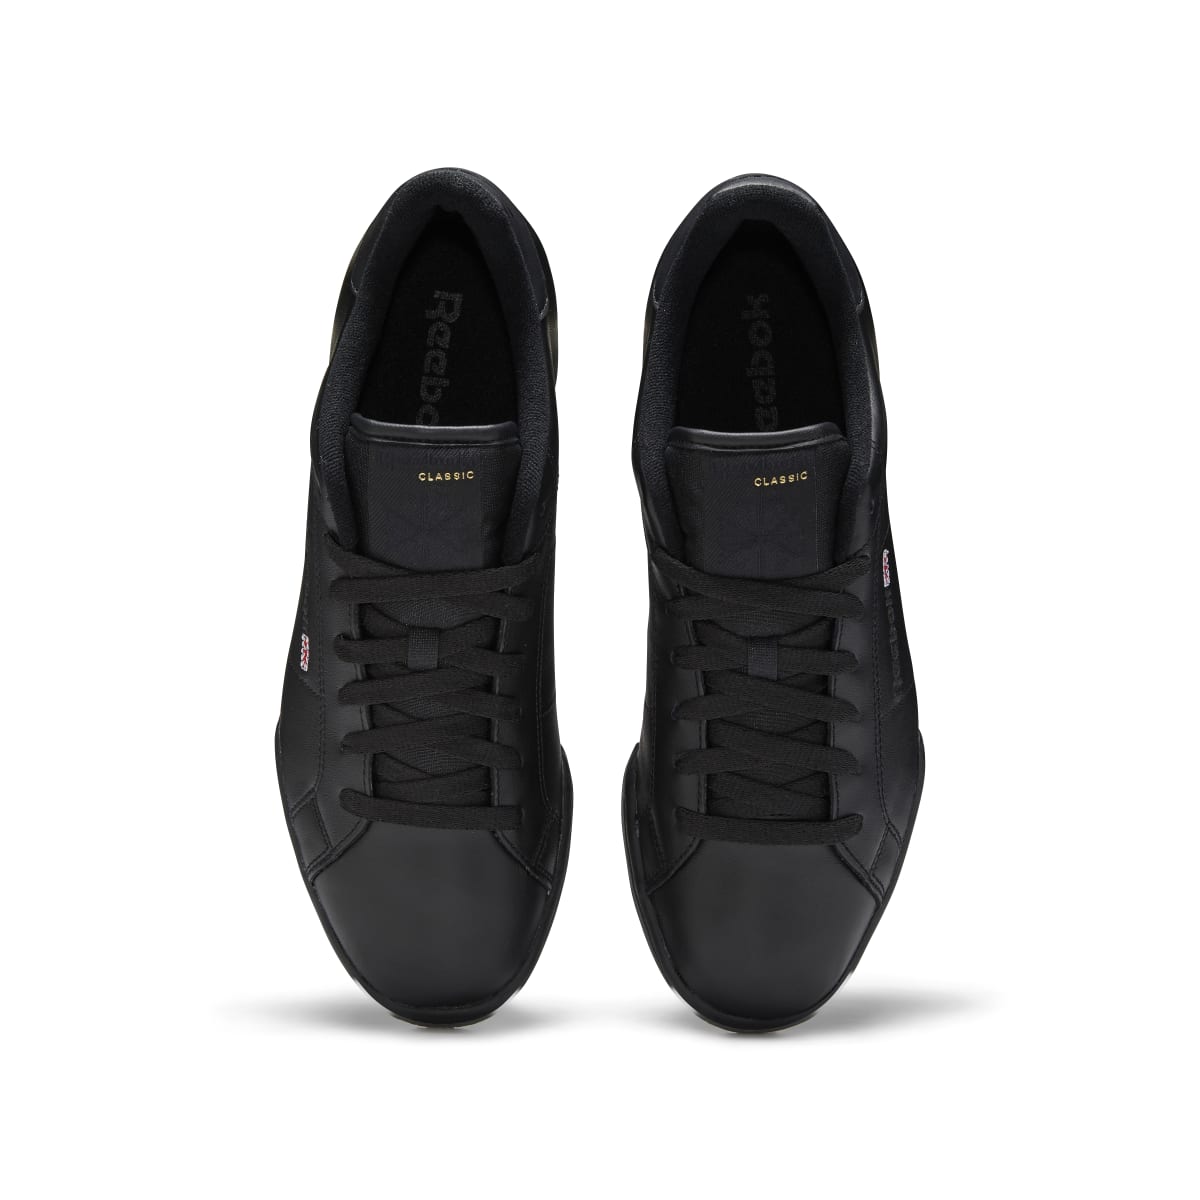 REEBOK 6836 NPC II MN'S (Medium) Black Leather Lifestyle Shoes www.kicks-footwear.com